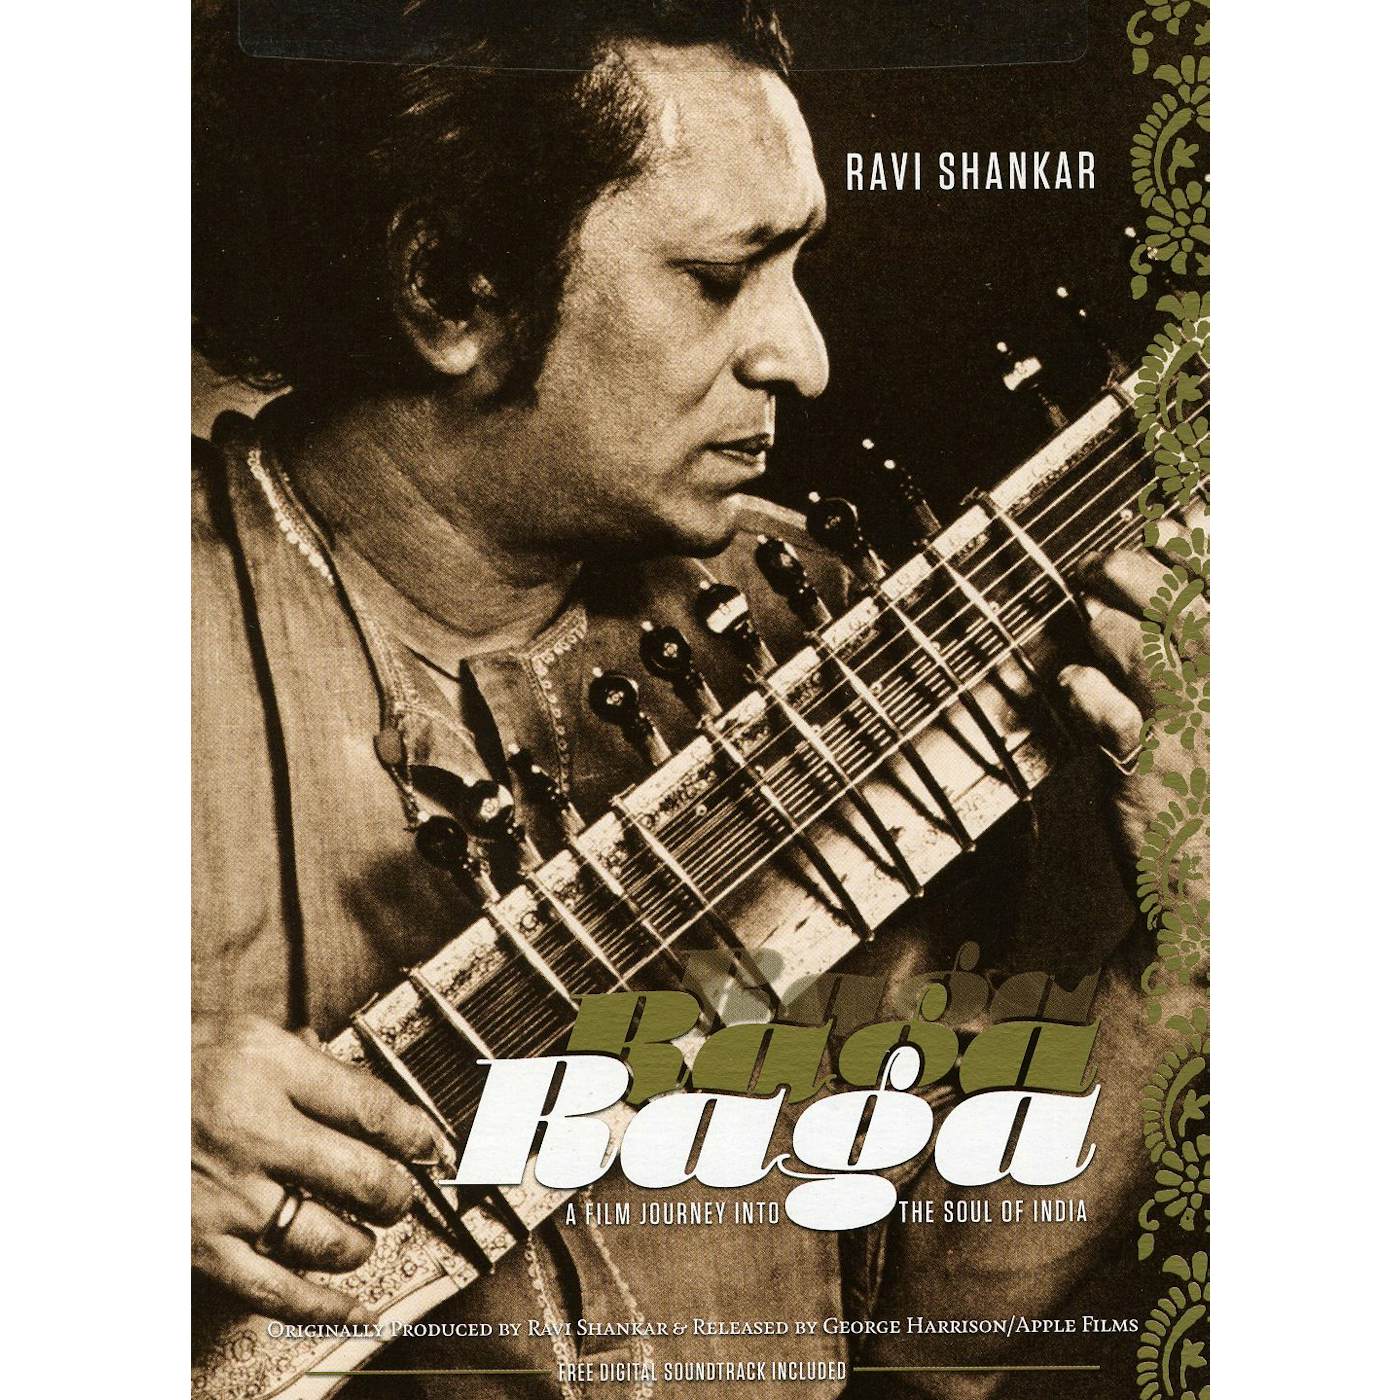 Ravi Shankar RAGA: A FILM JOURNEY TO THE SOUL OF INDIA DVD